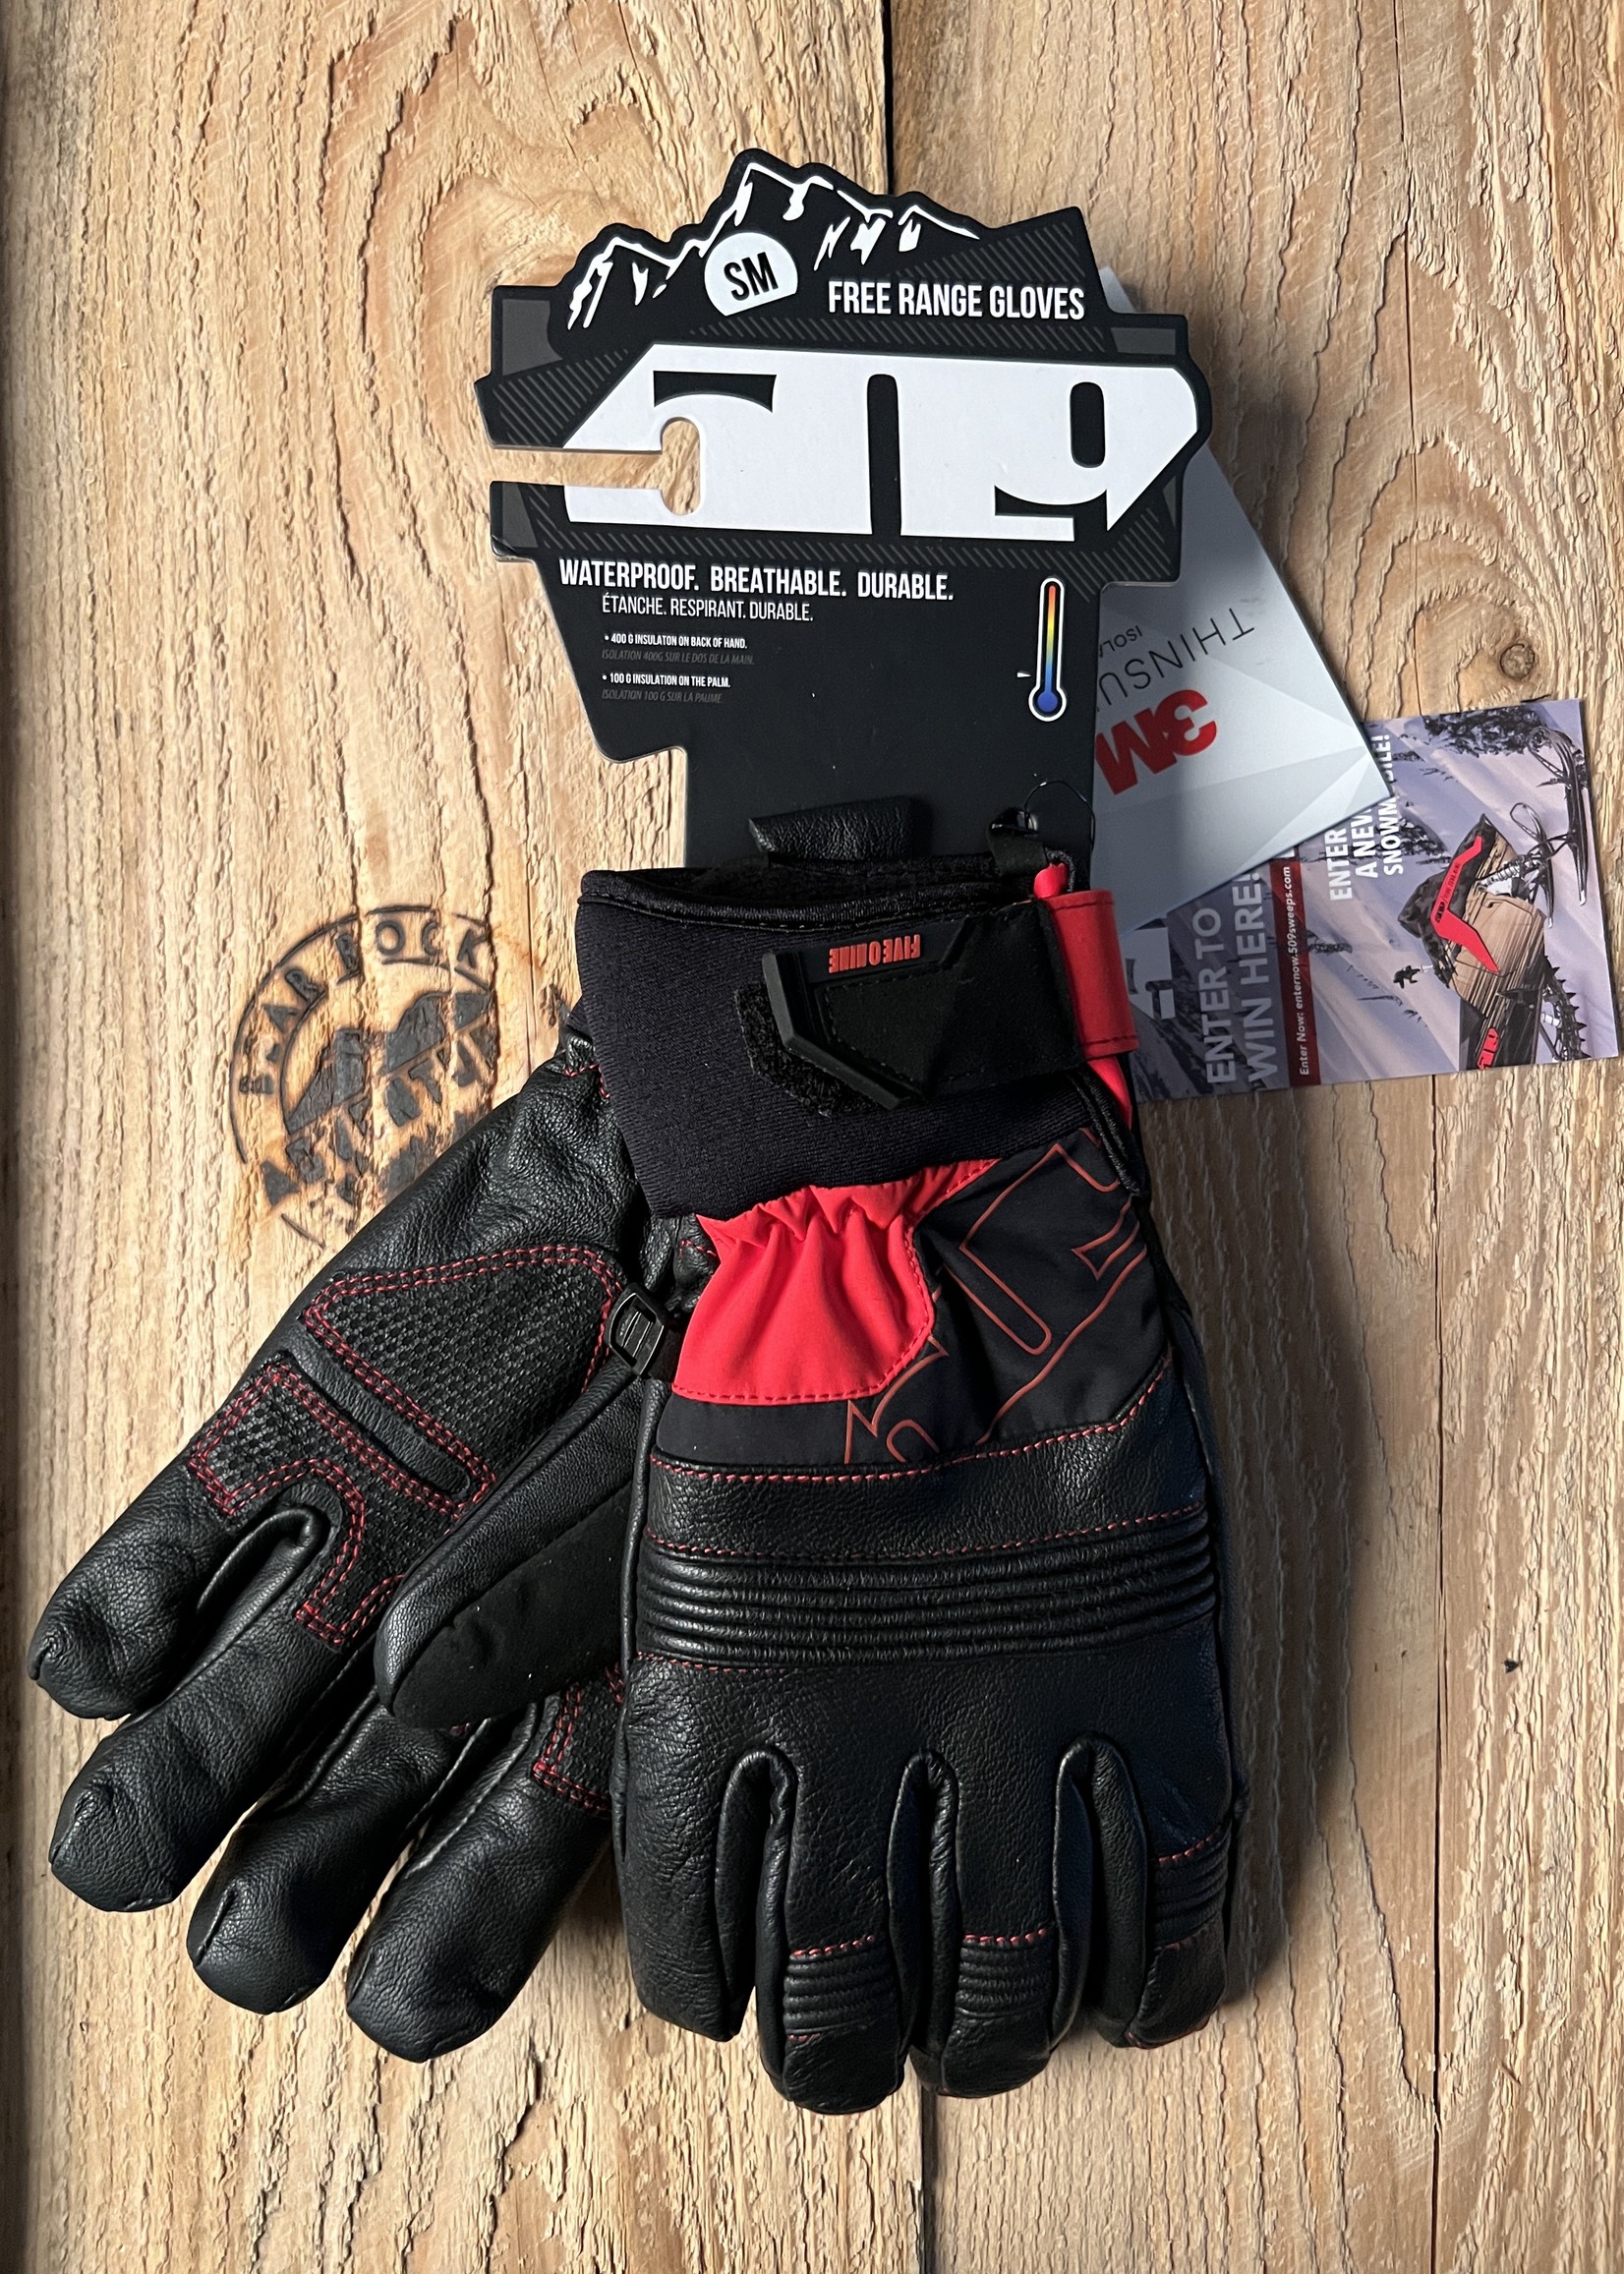 509 509 Free Range Gloves